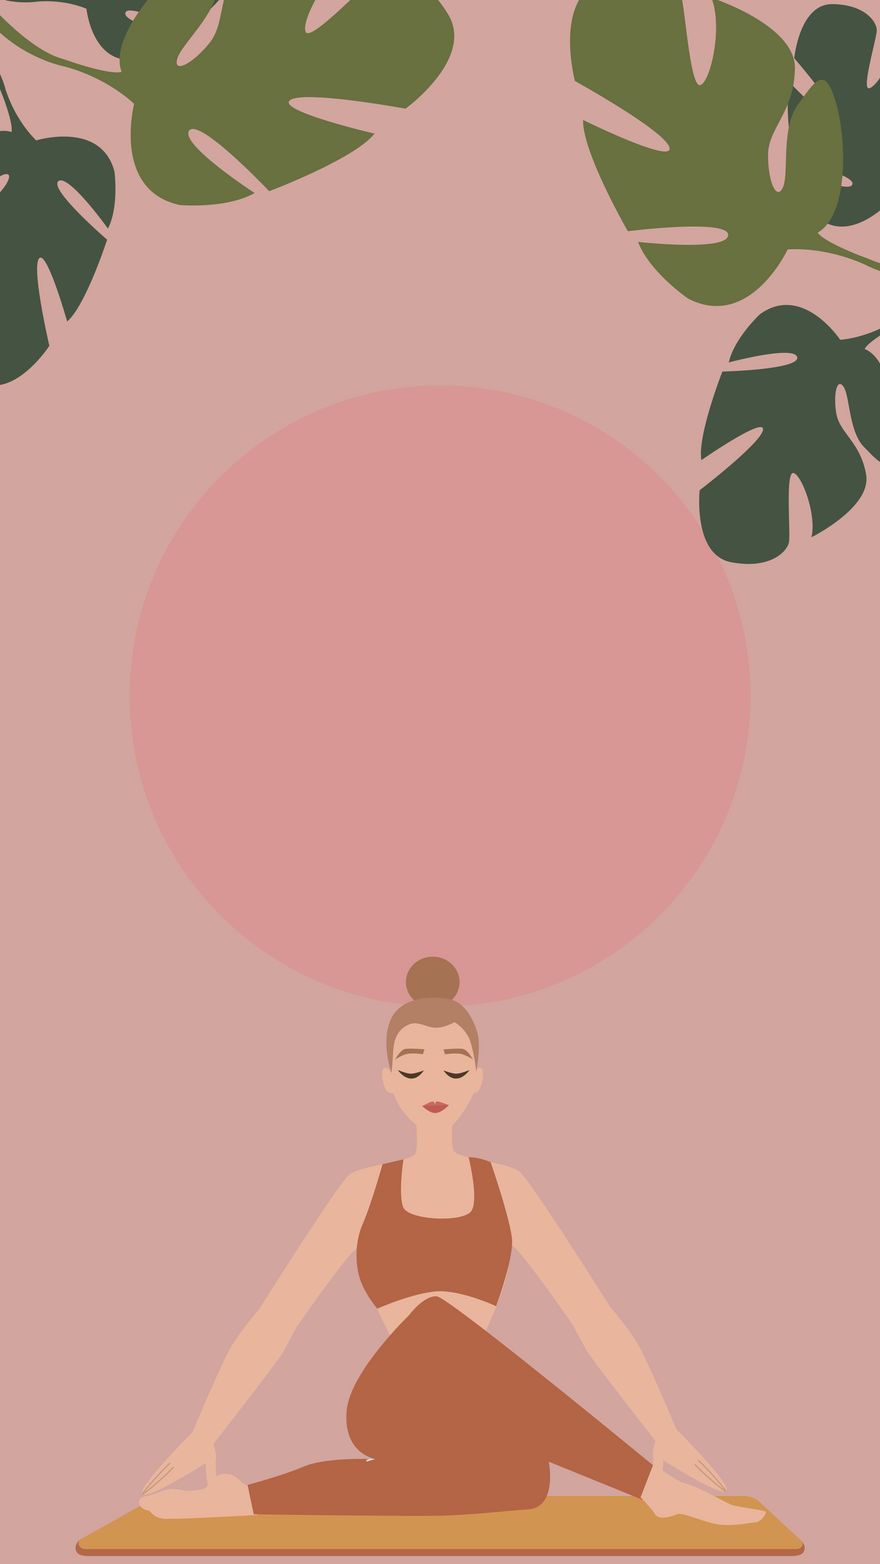 International Yoga Day iPhone Background in EPS, Illustrator, JPG